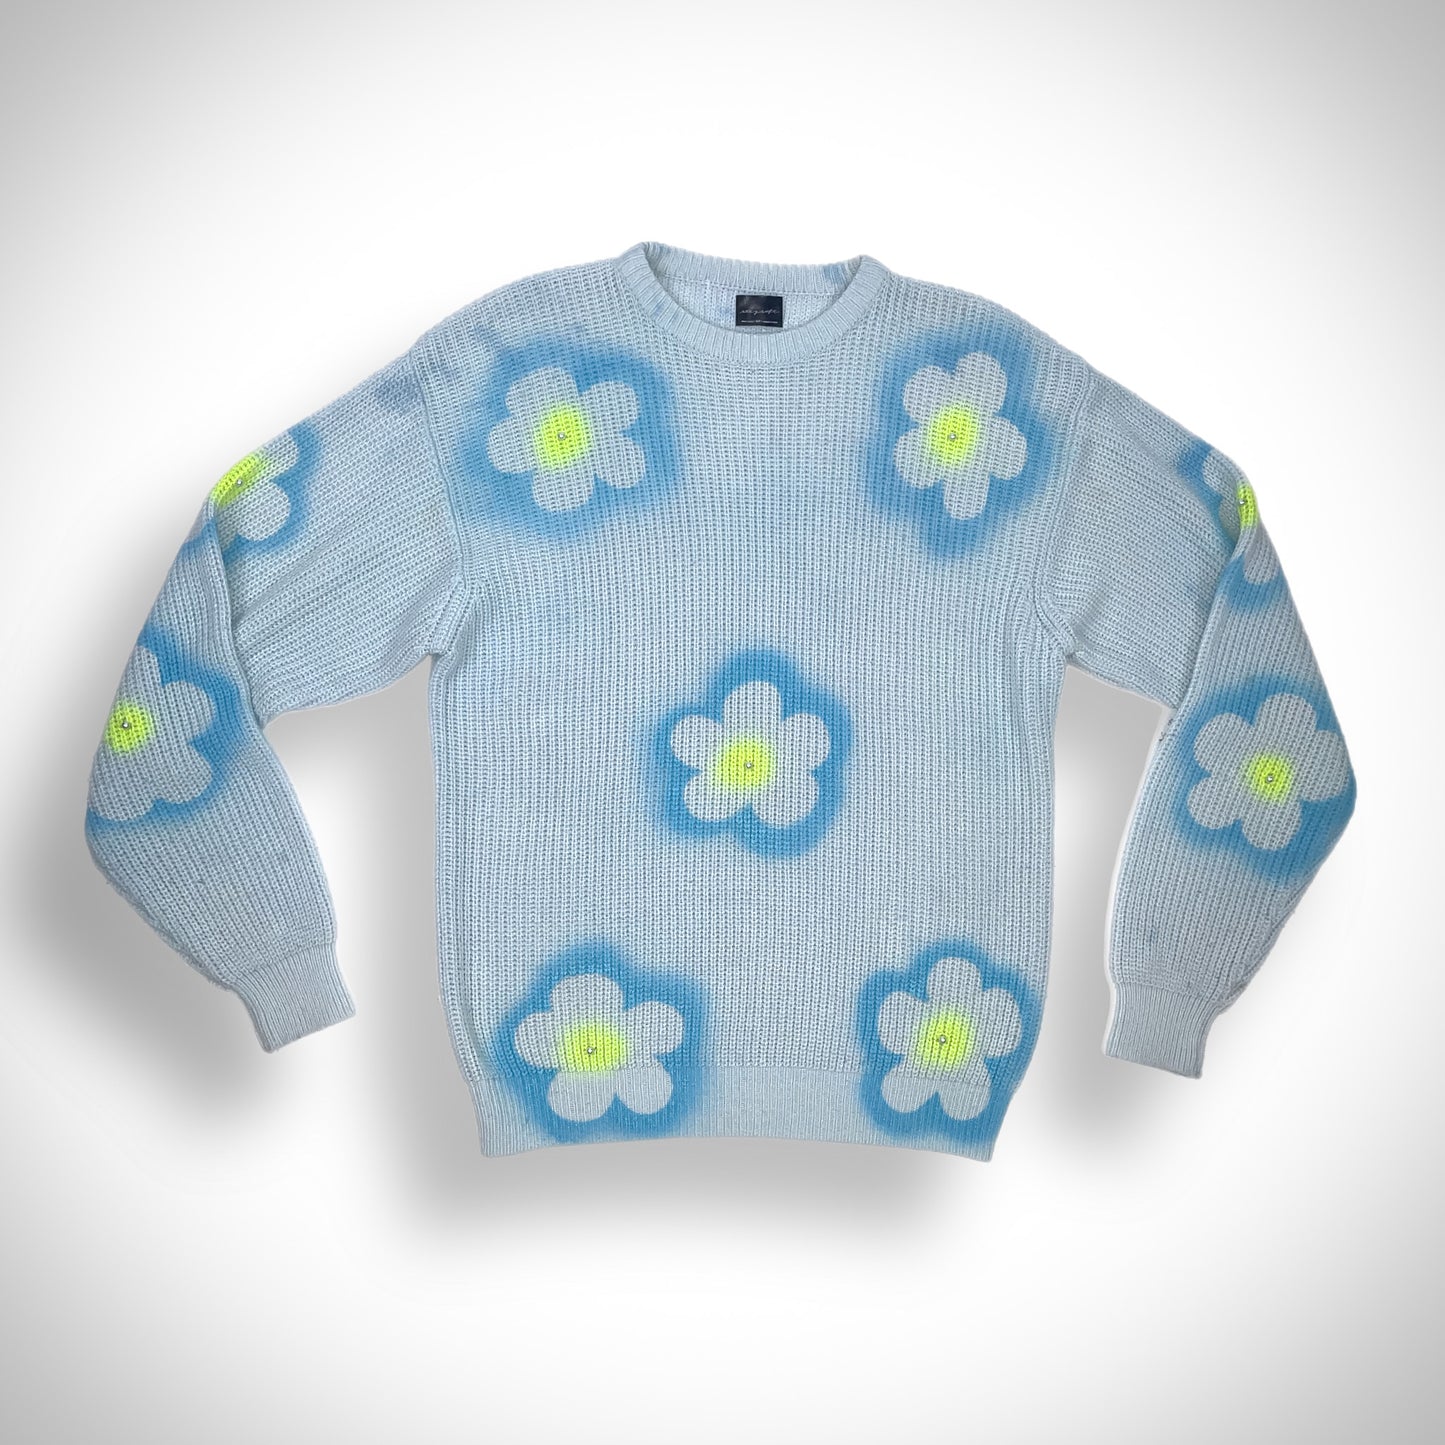 Something Blue Sweater